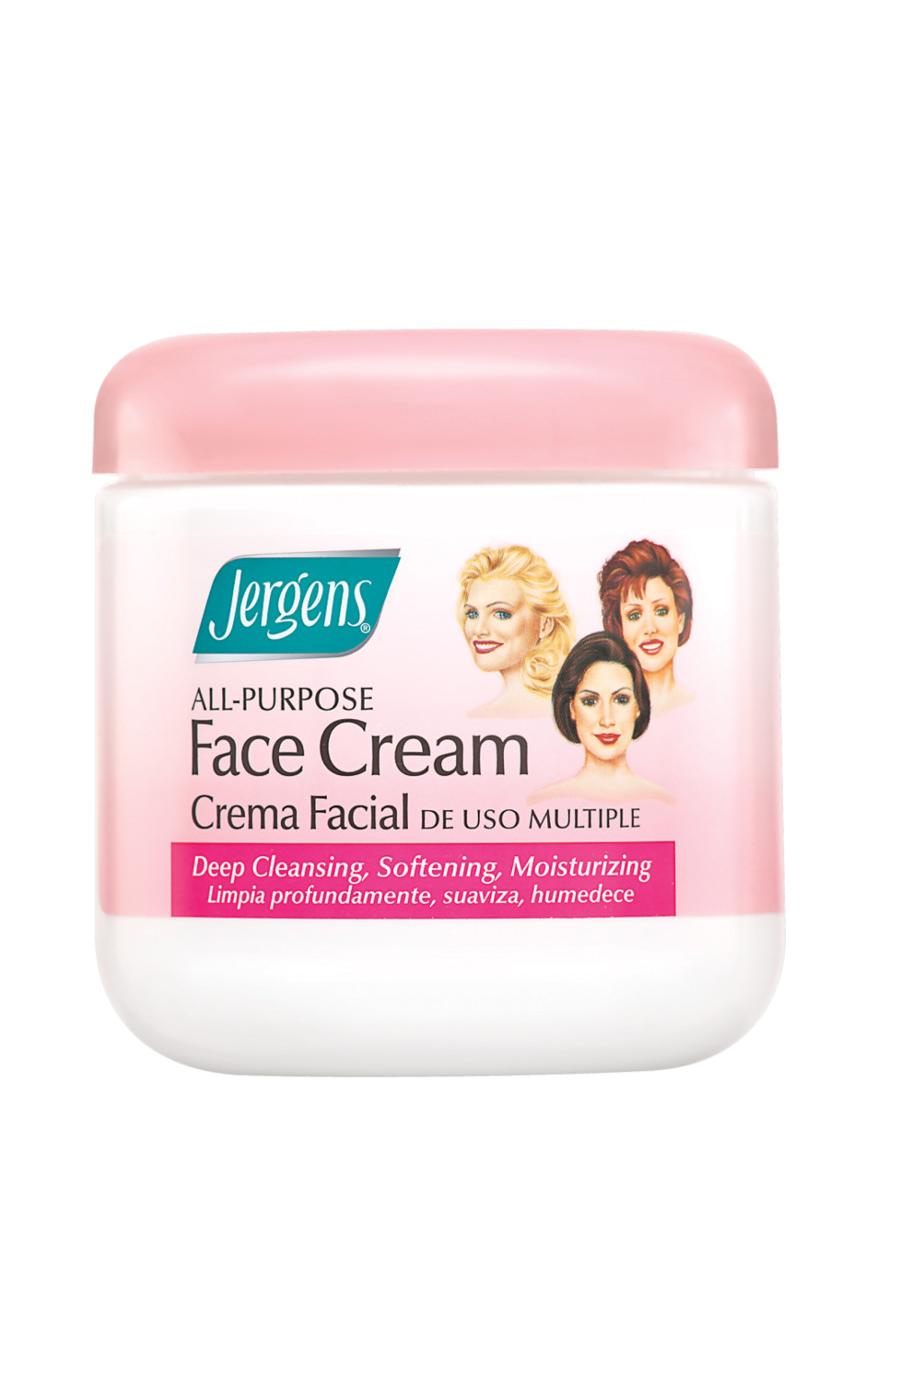 Jergens All-Purpose Face Cream; image 1 of 2